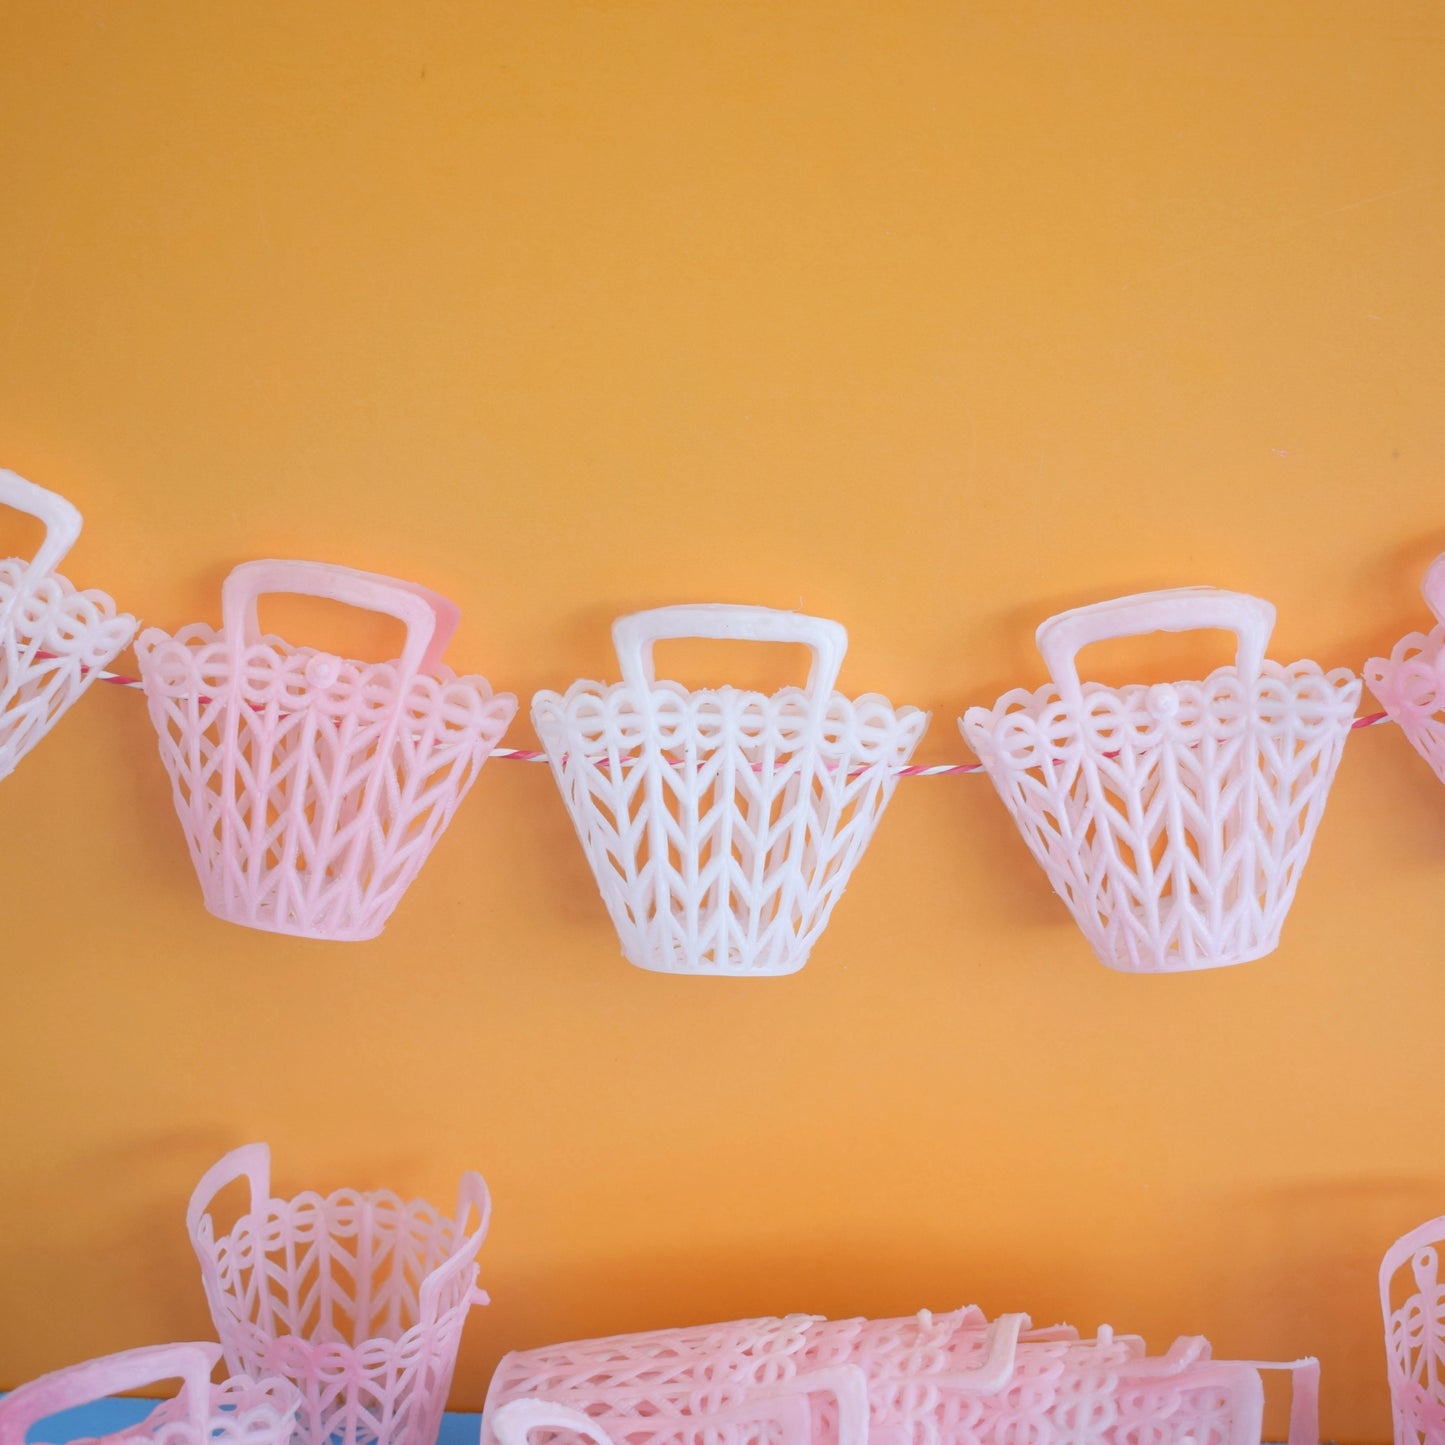 Vintage 1960s Plastic Basket Alternative Advent Calendar - Pink